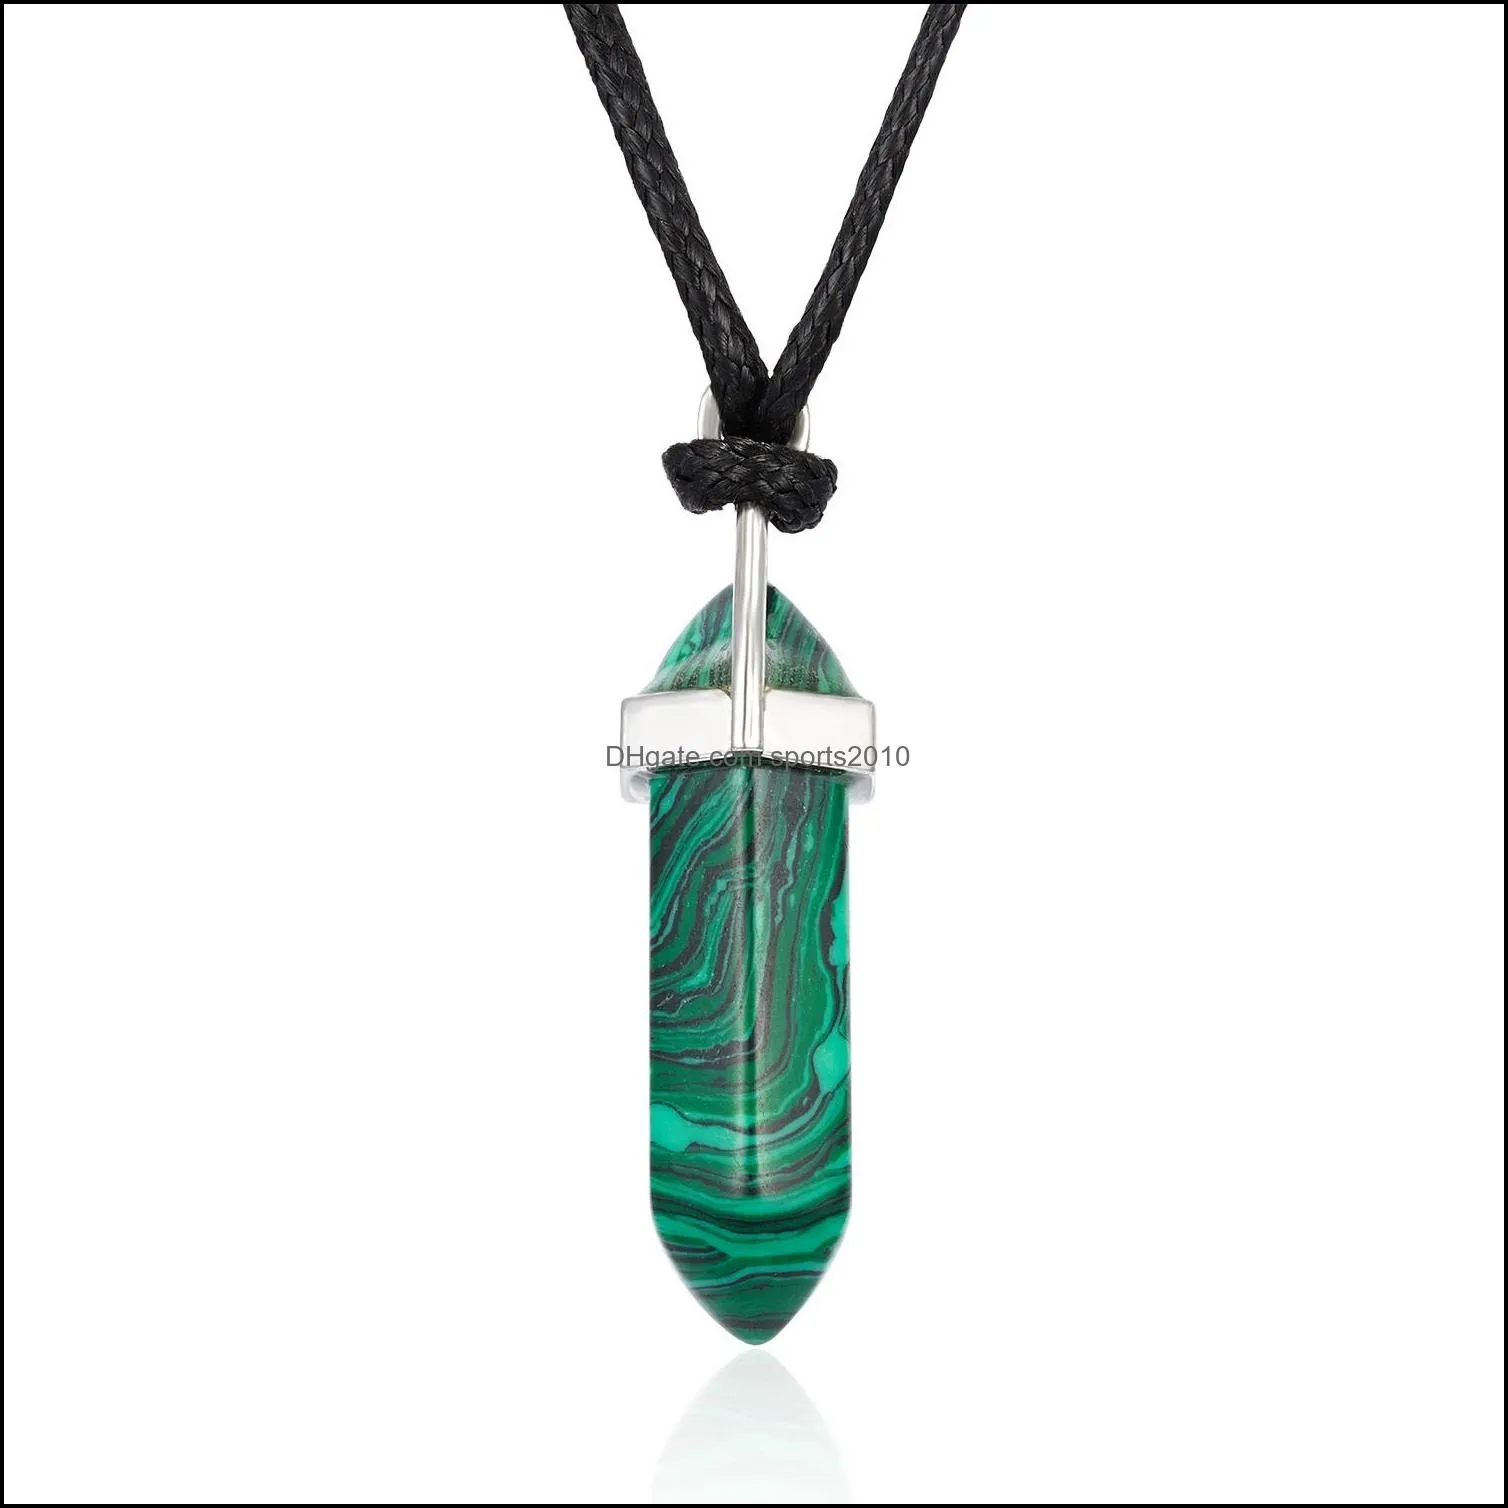 synthetic stone hexagonal prism pendant necklace amulet black rope chain necklaces for women men